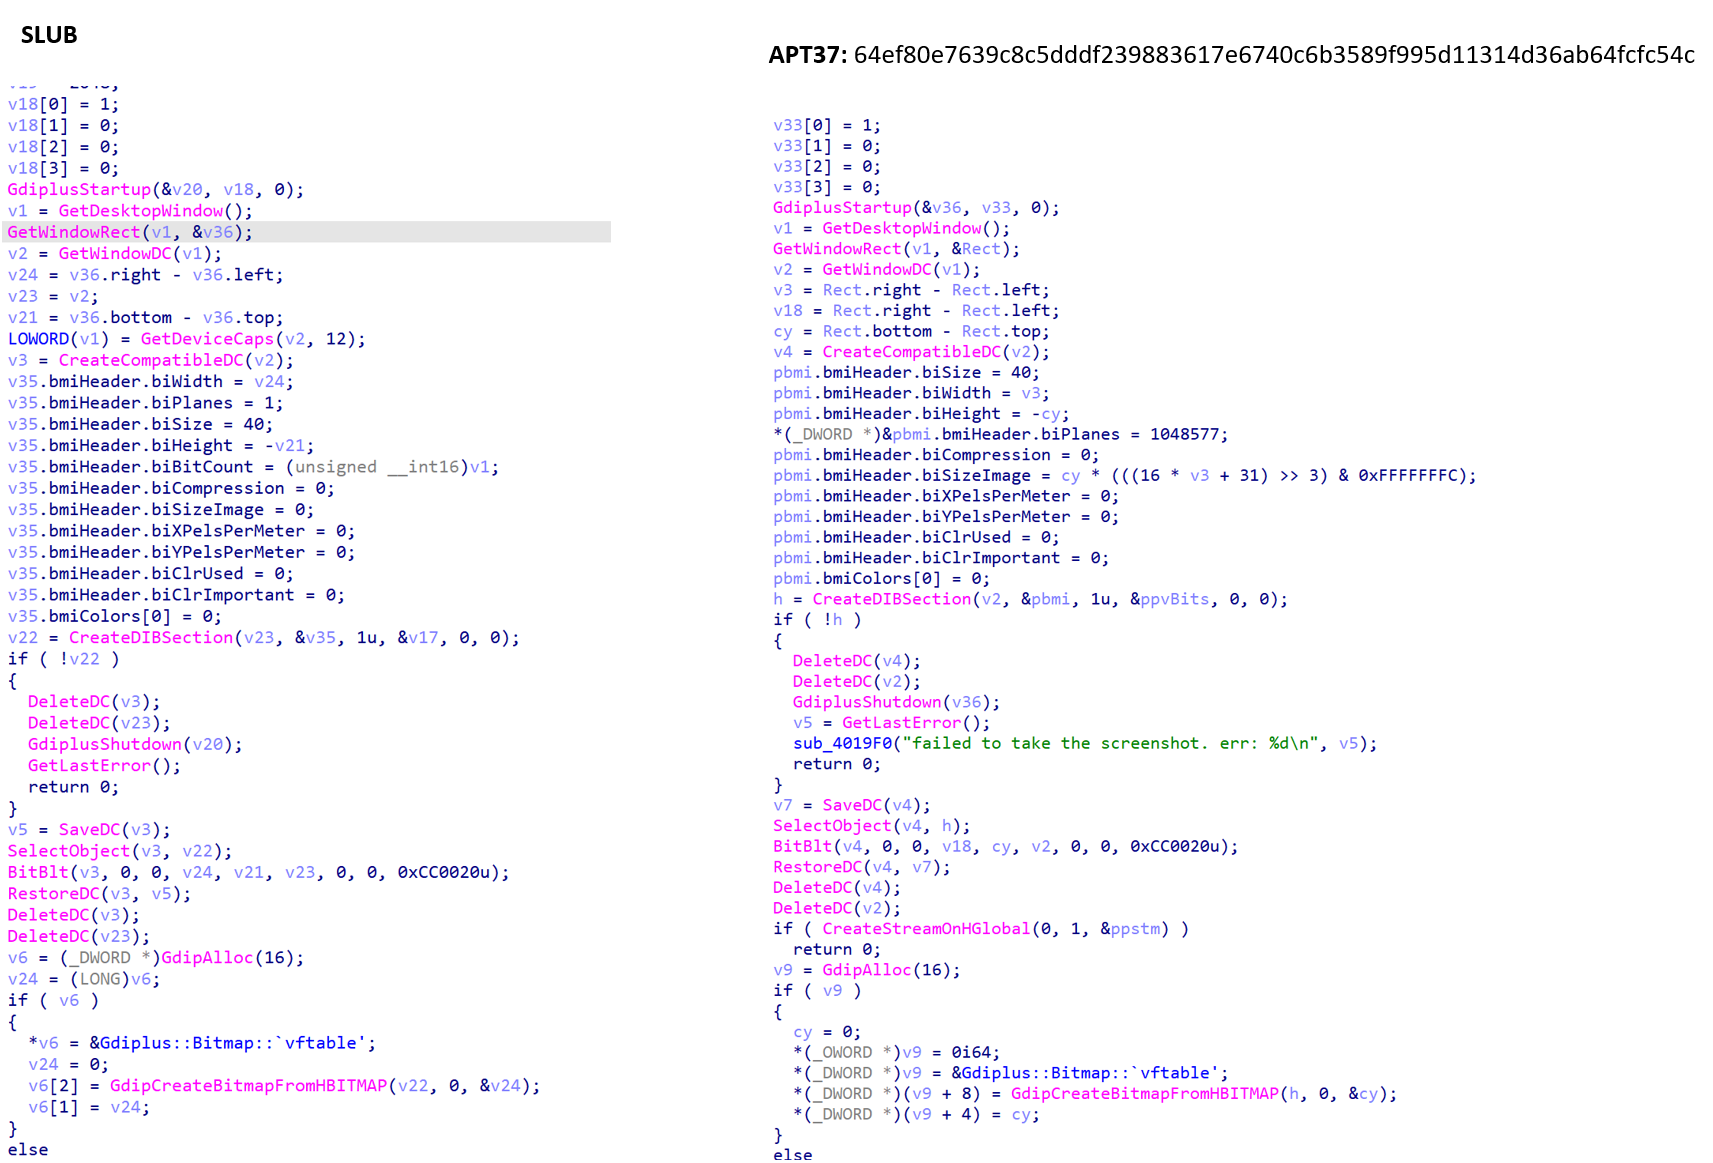 Figure 12. Screenshot functionality comparison between SLUB and APT37